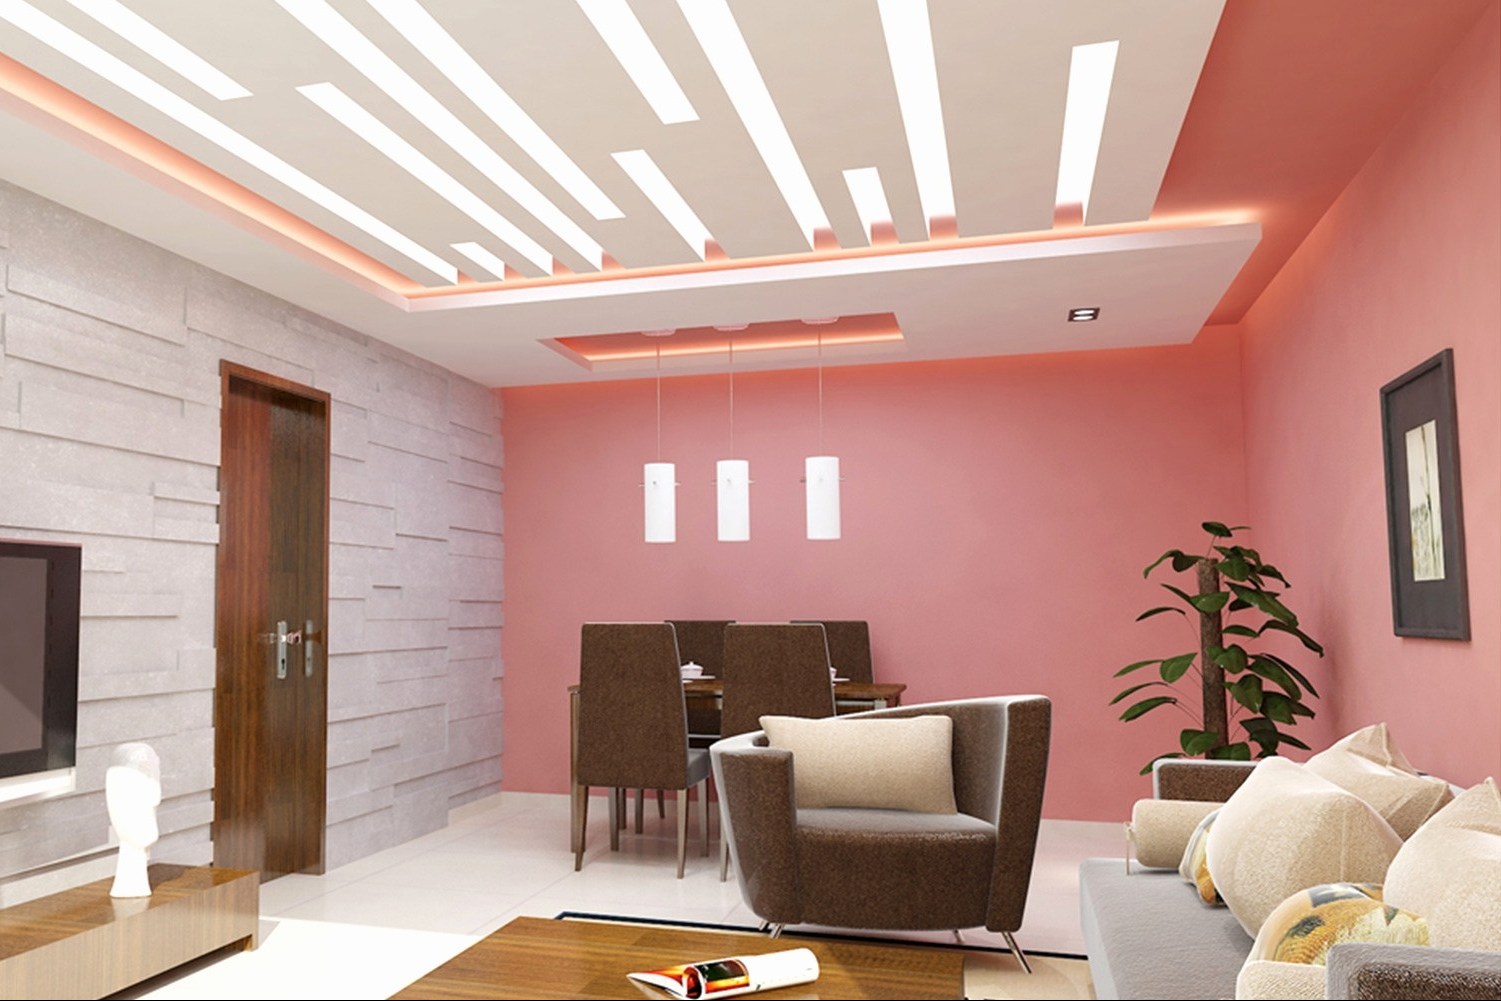 harga wallpaper plafon langit,ceiling,interior design,room,living room,property